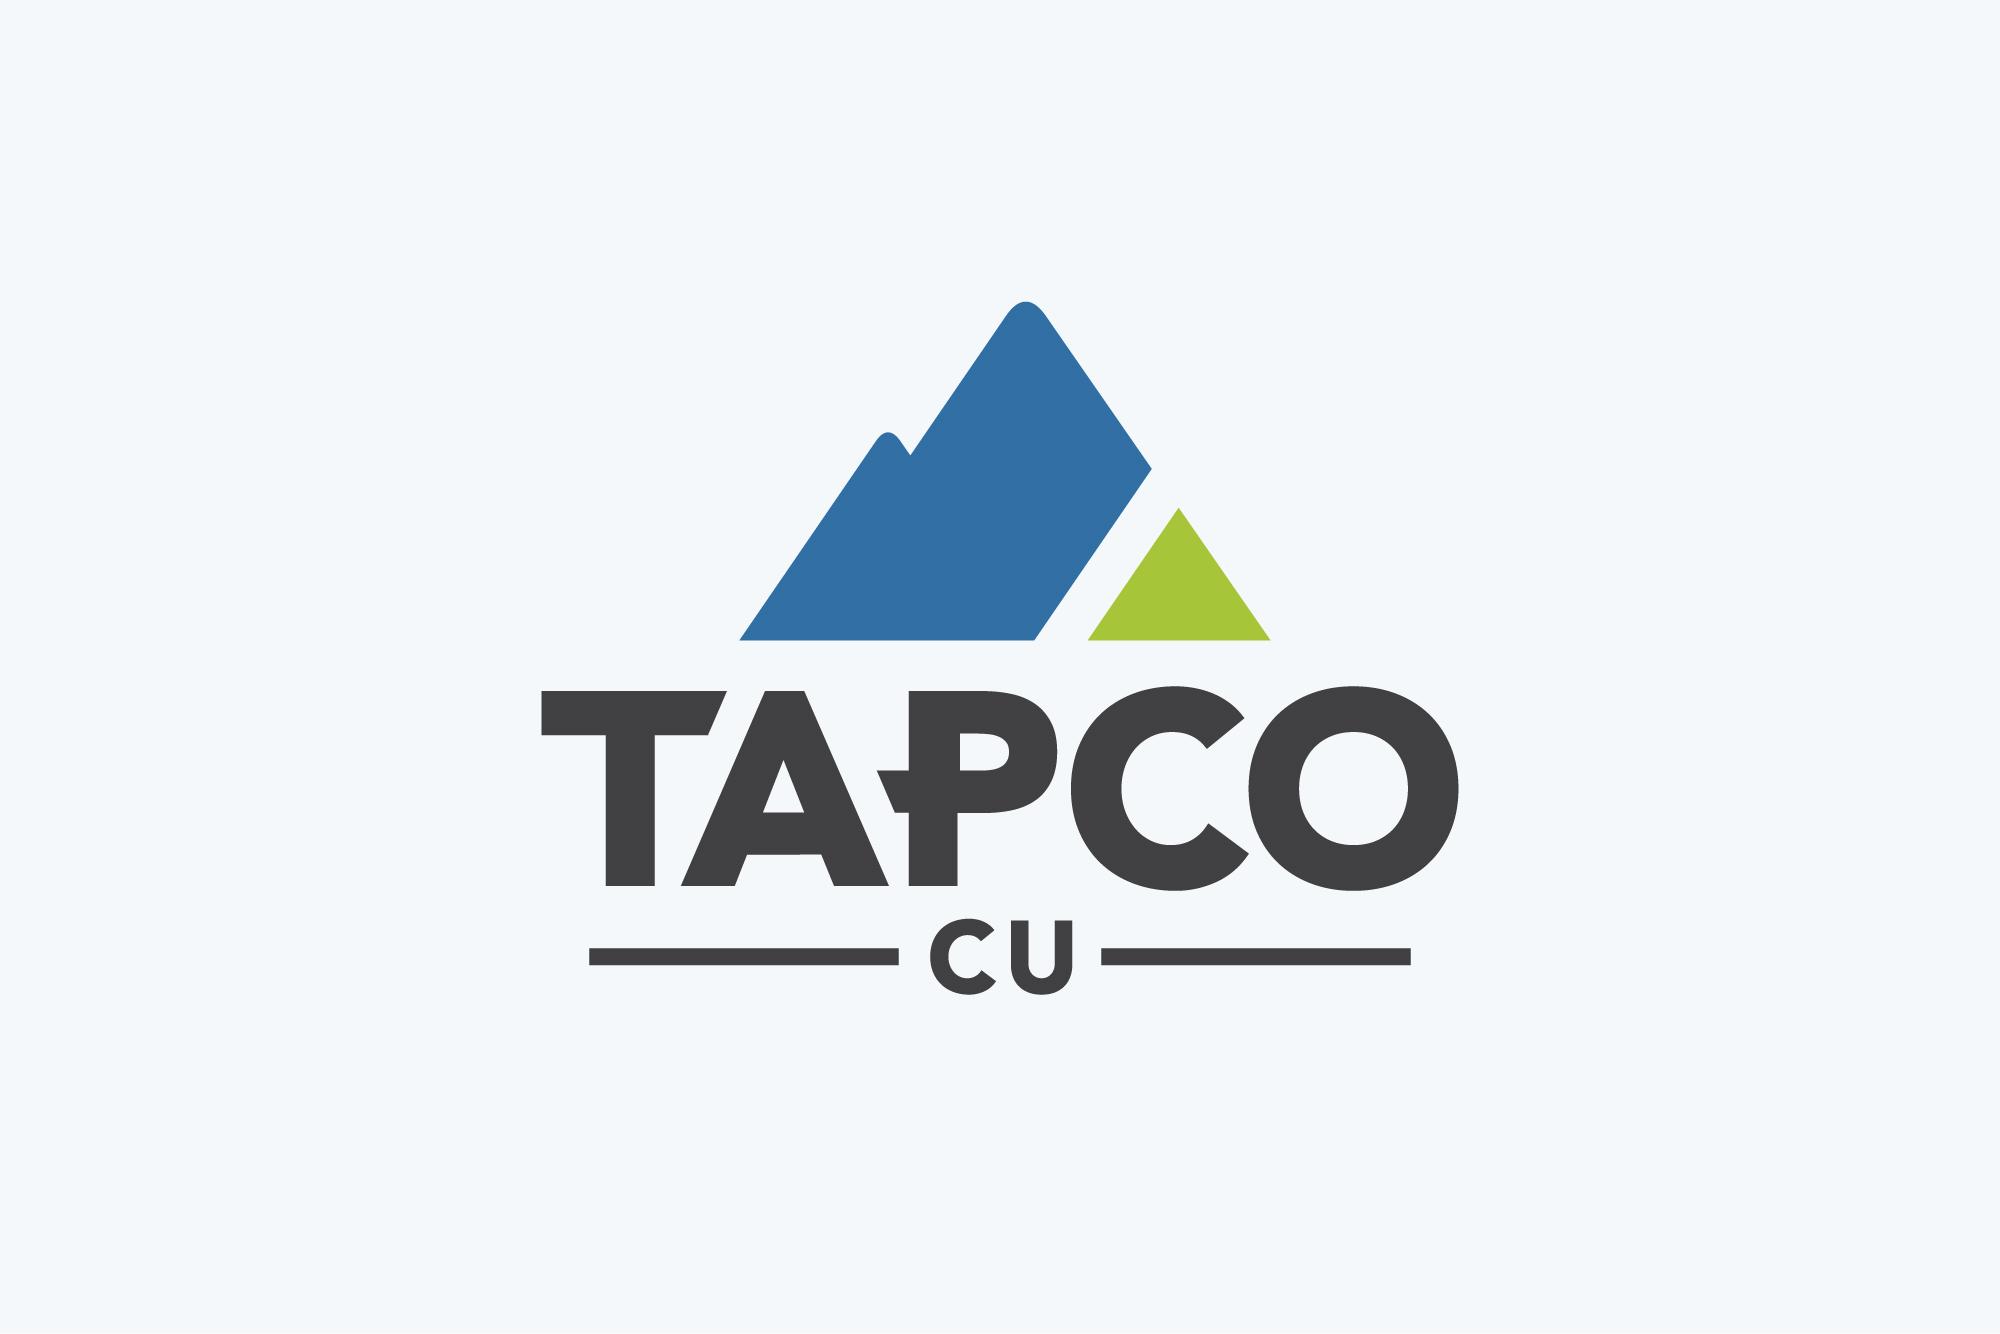 TAPCO Credit Union logo